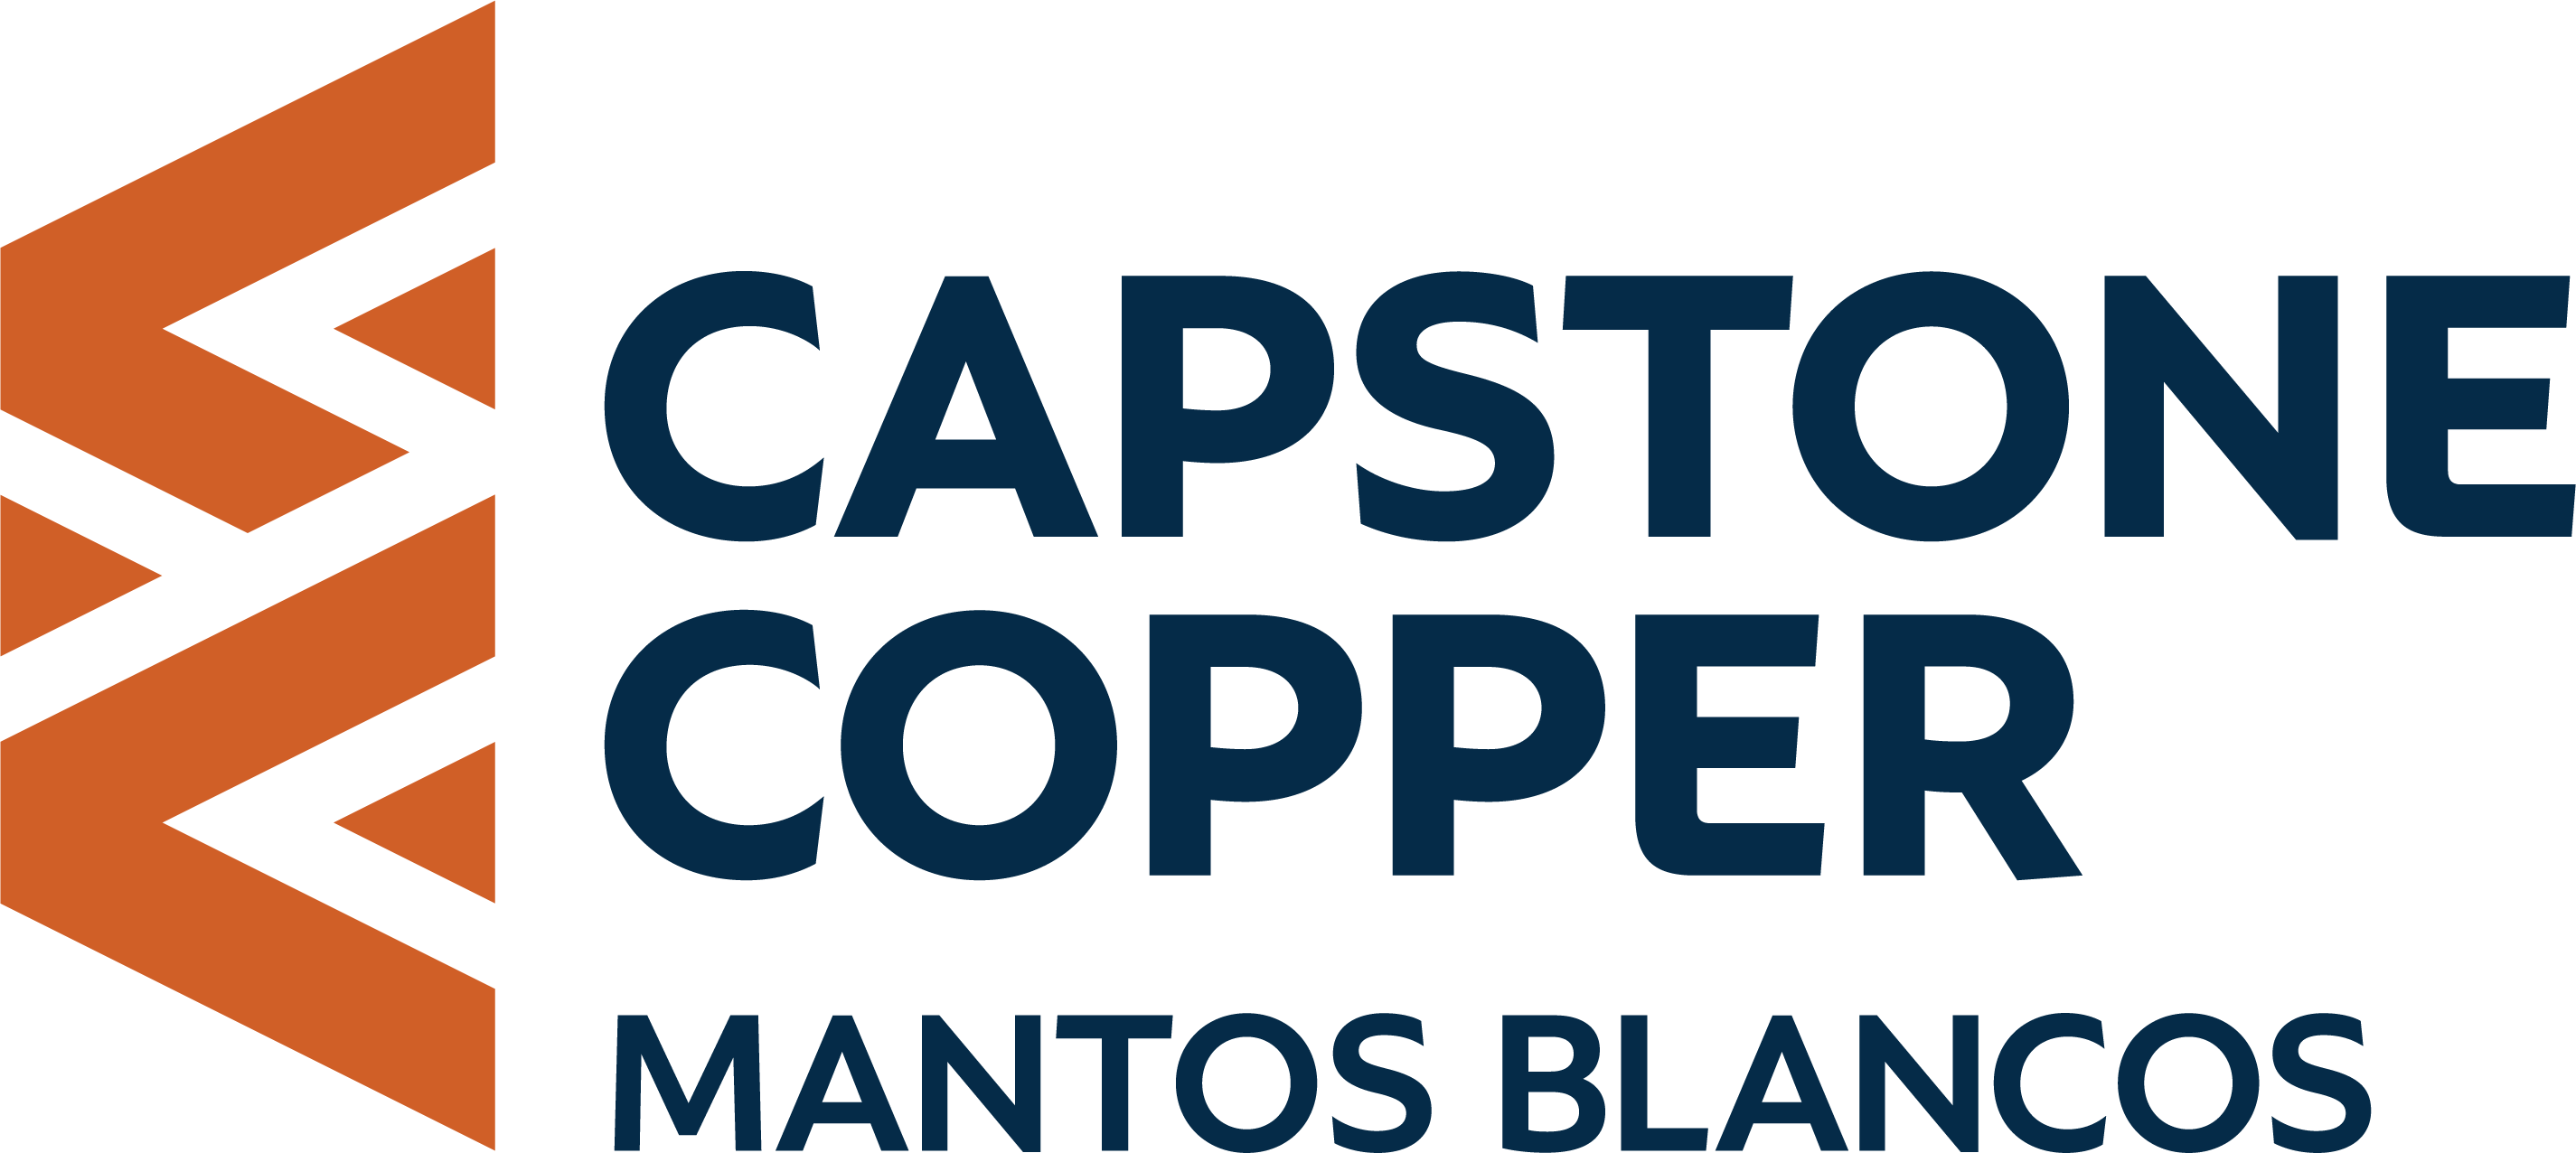 CapstoneCopper_MantosBlancos_RGB